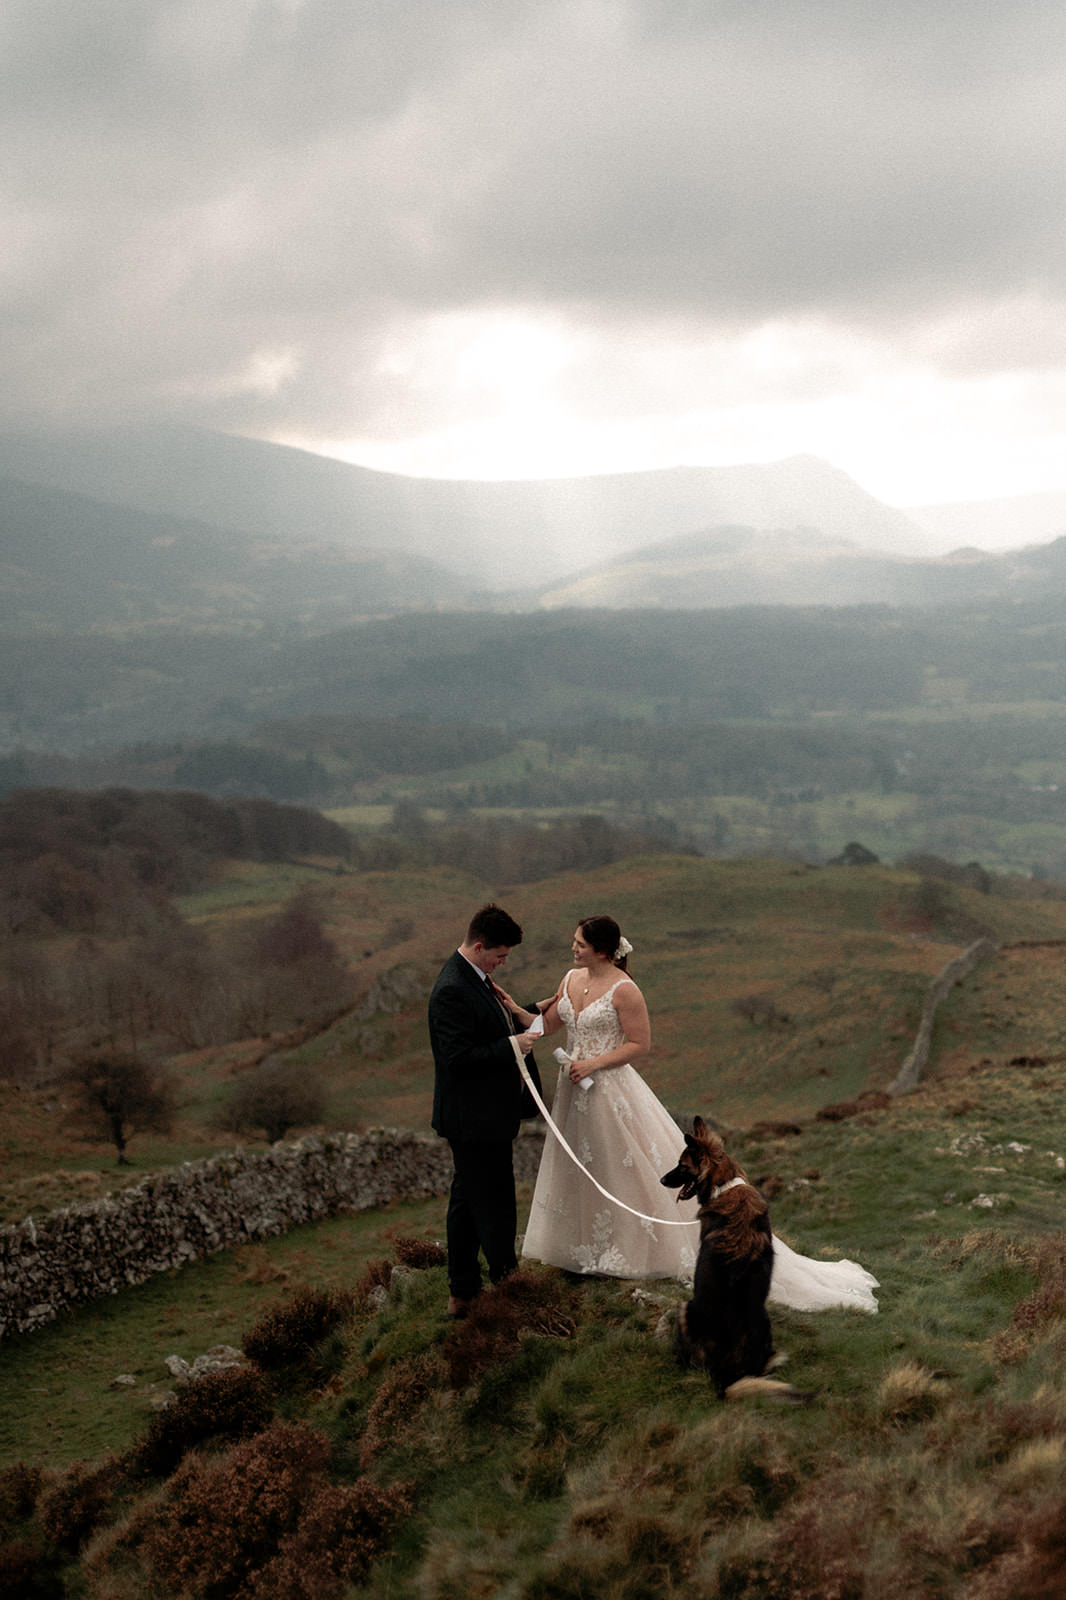 Snowdonia (Eryri) Elopement Photography | UK Elopement Photographer